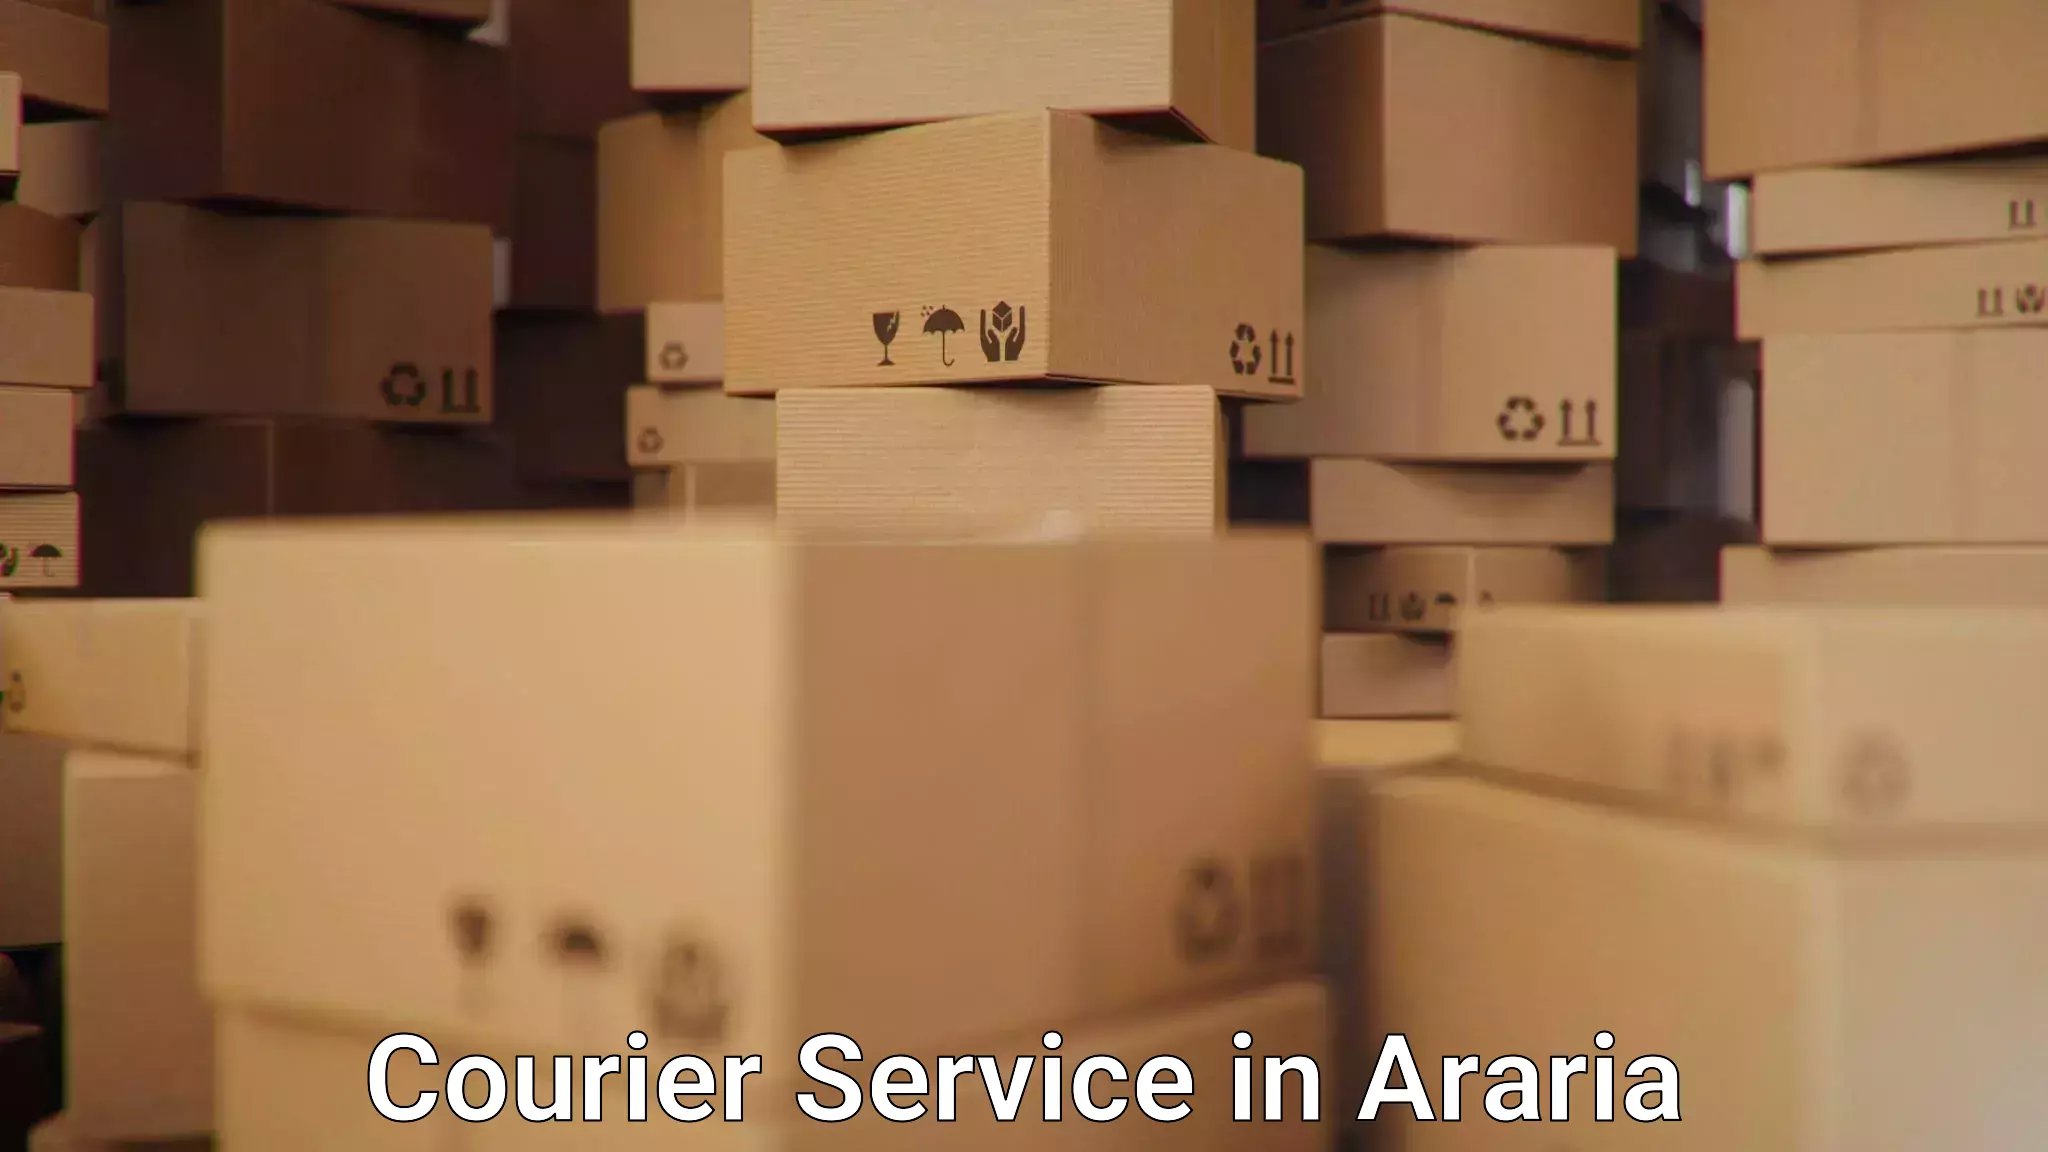 Urgent courier needs in Araria